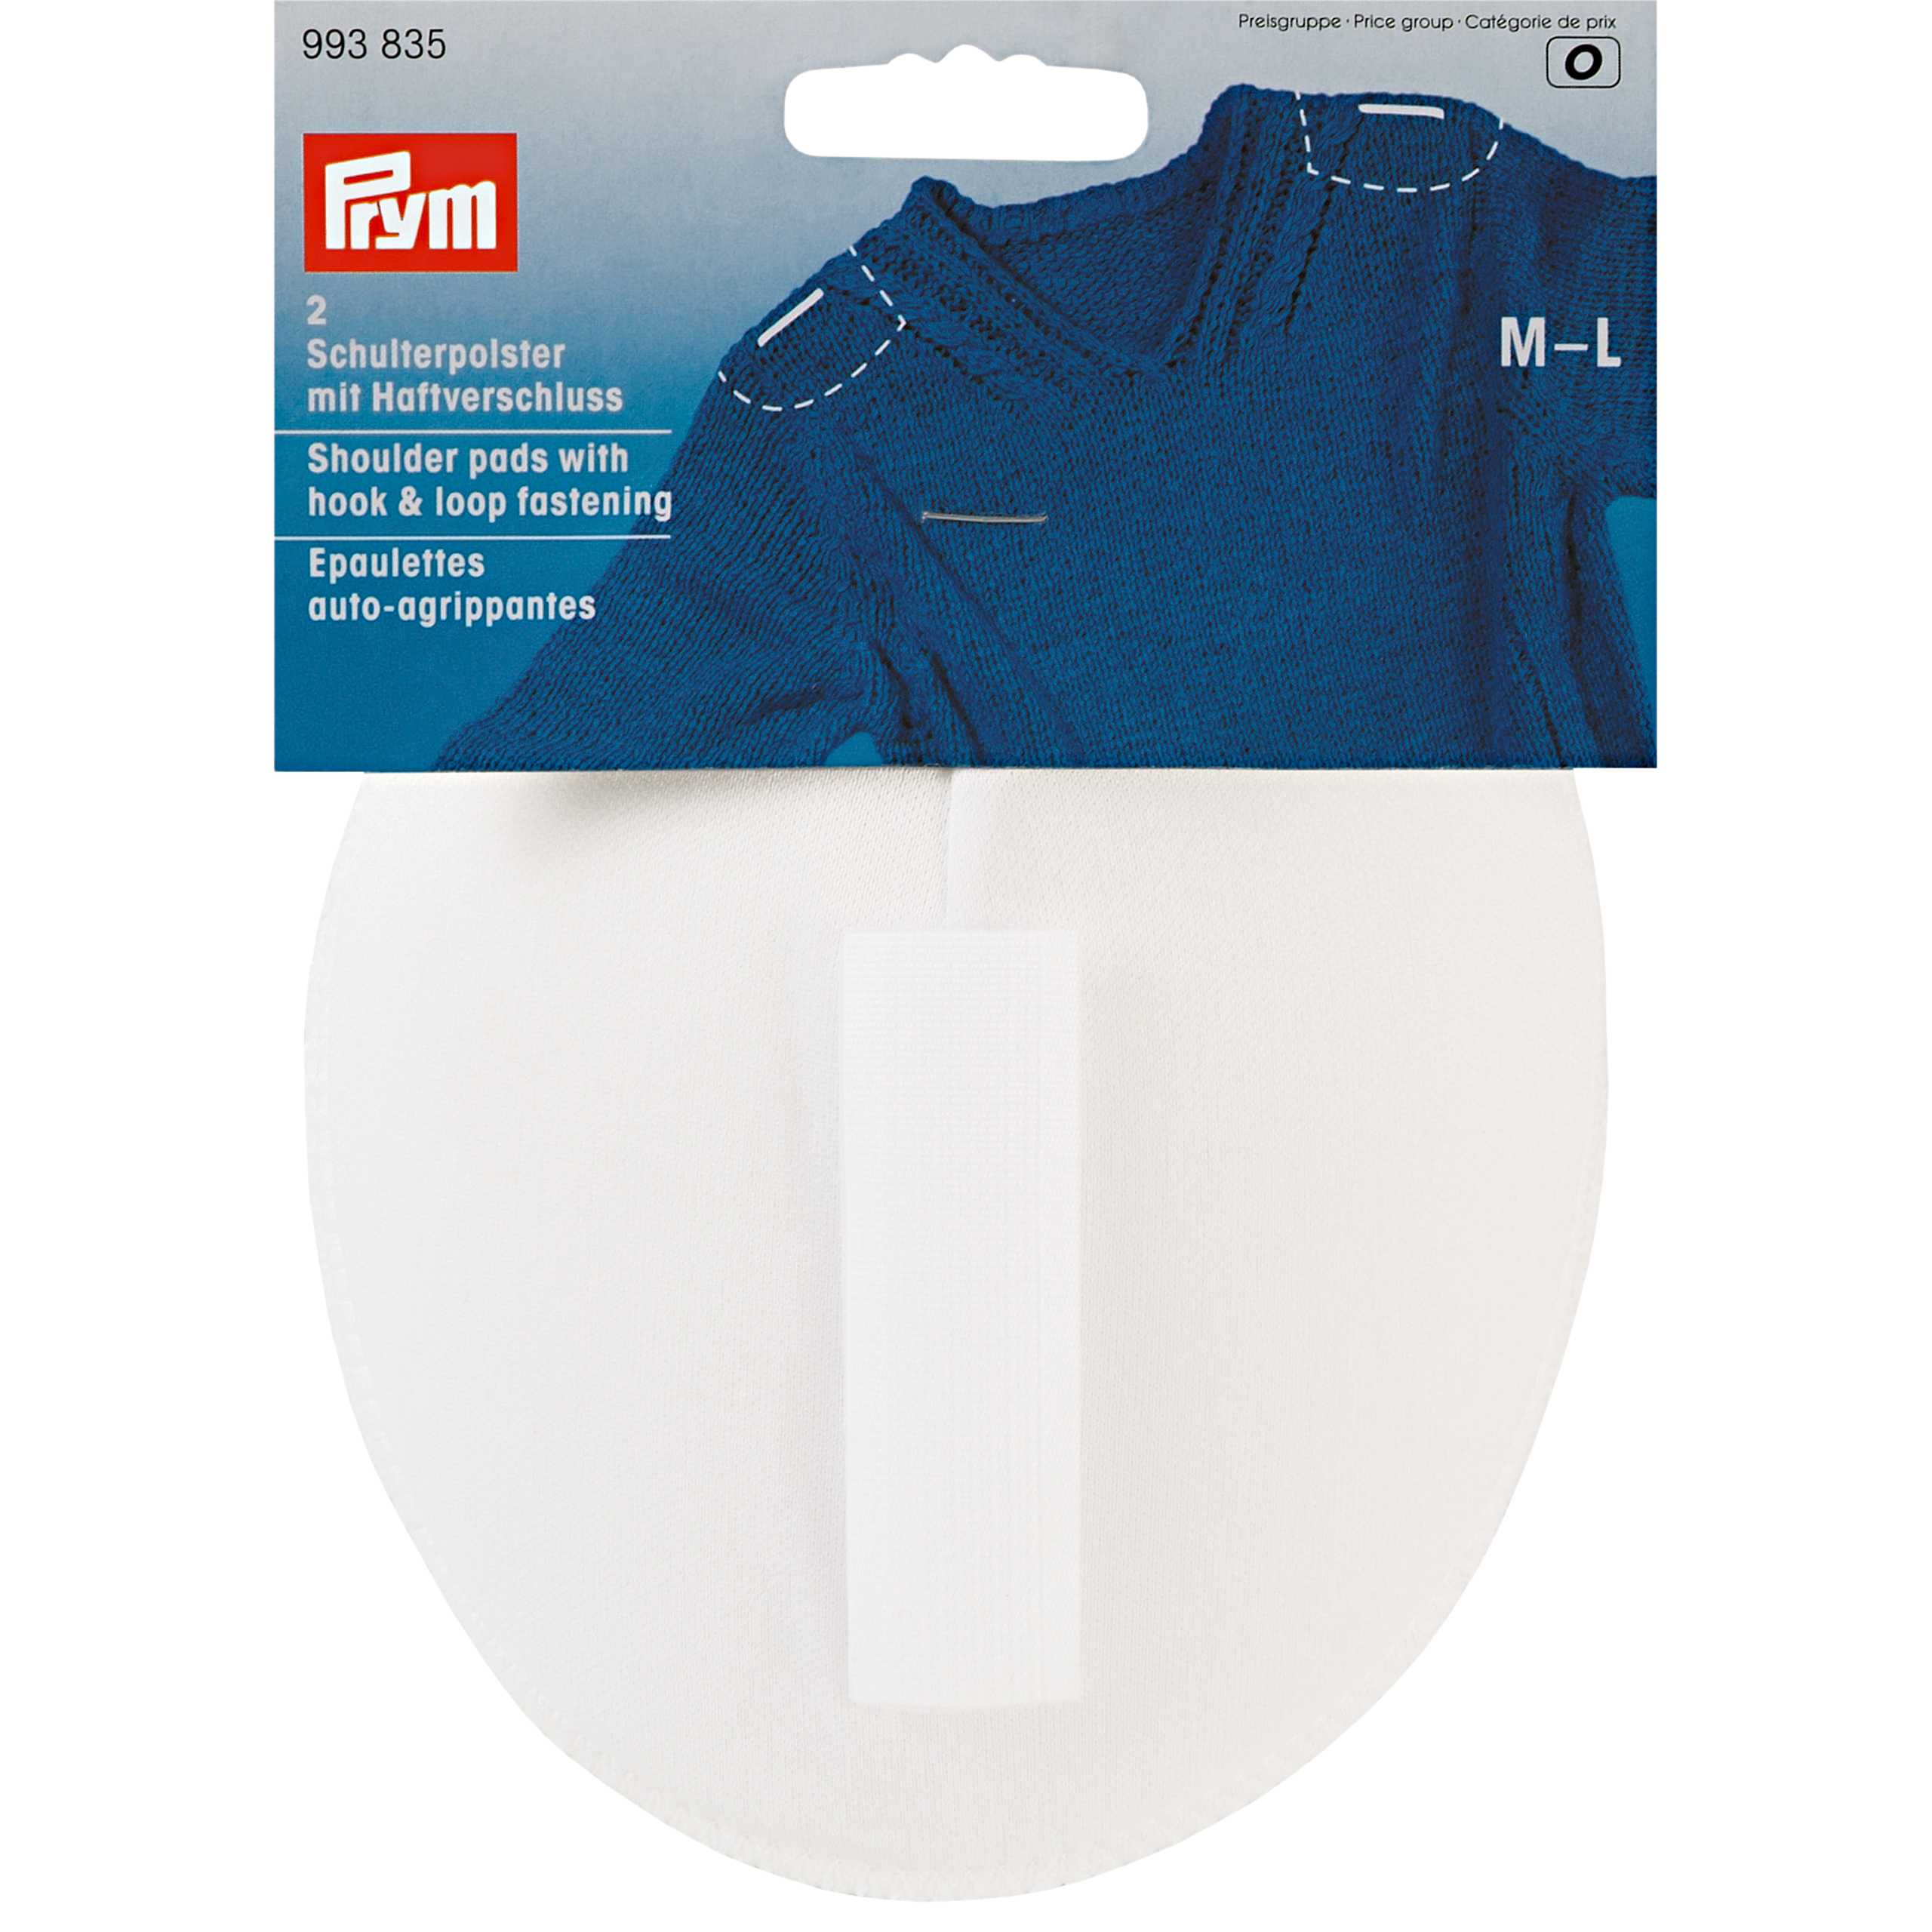 Shoulder pads Raglan with hook and loop fastening white M - L, 2 St